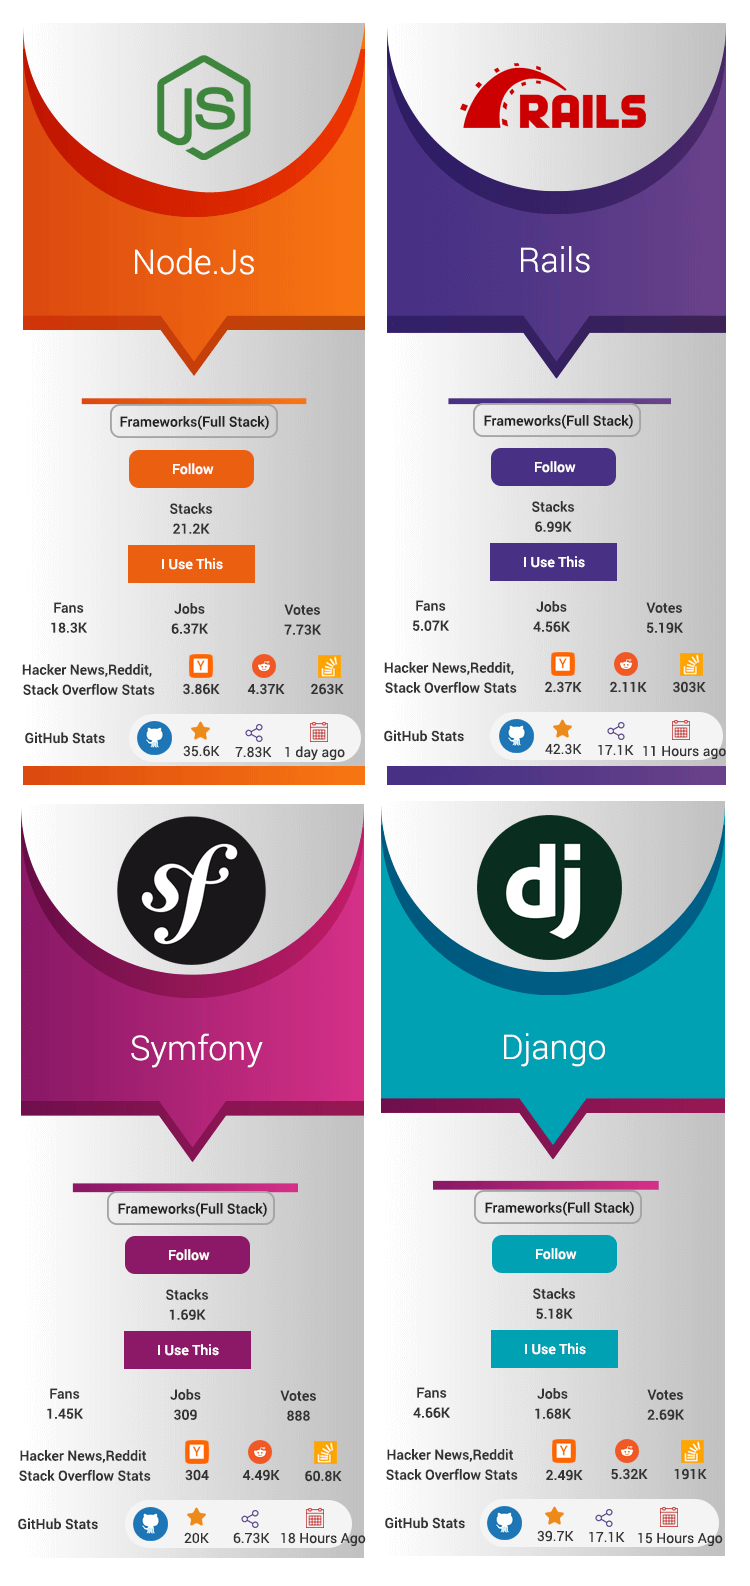 Node js is a popular technology in comparison to similar ones like Rails, Symfony & Django